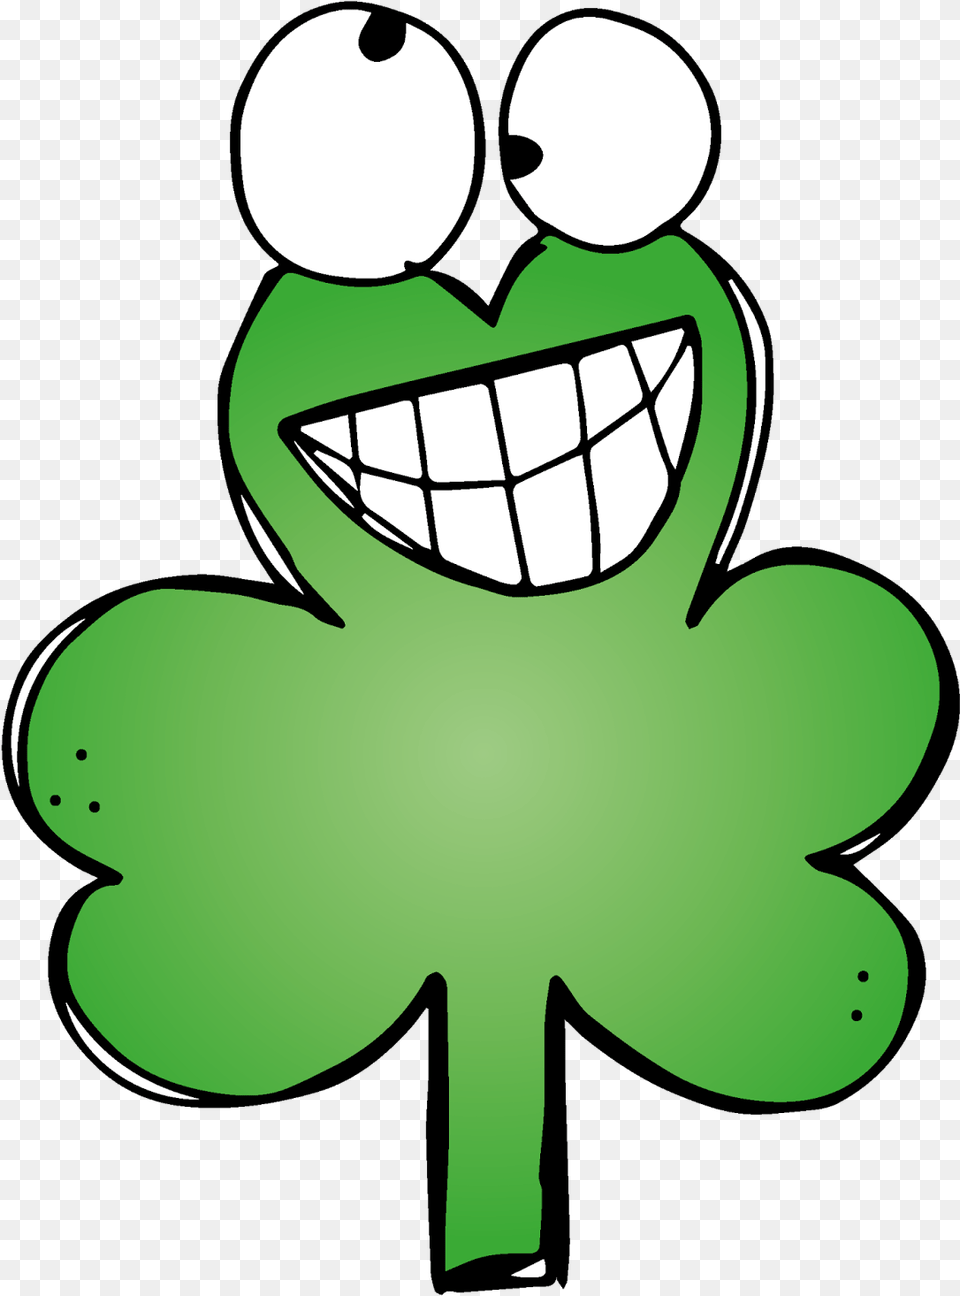 Patrick S Day Amp Giveaway Winner St Patrick39s Day Desenho, Green, Leaf, Plant, Stencil Free Png Download